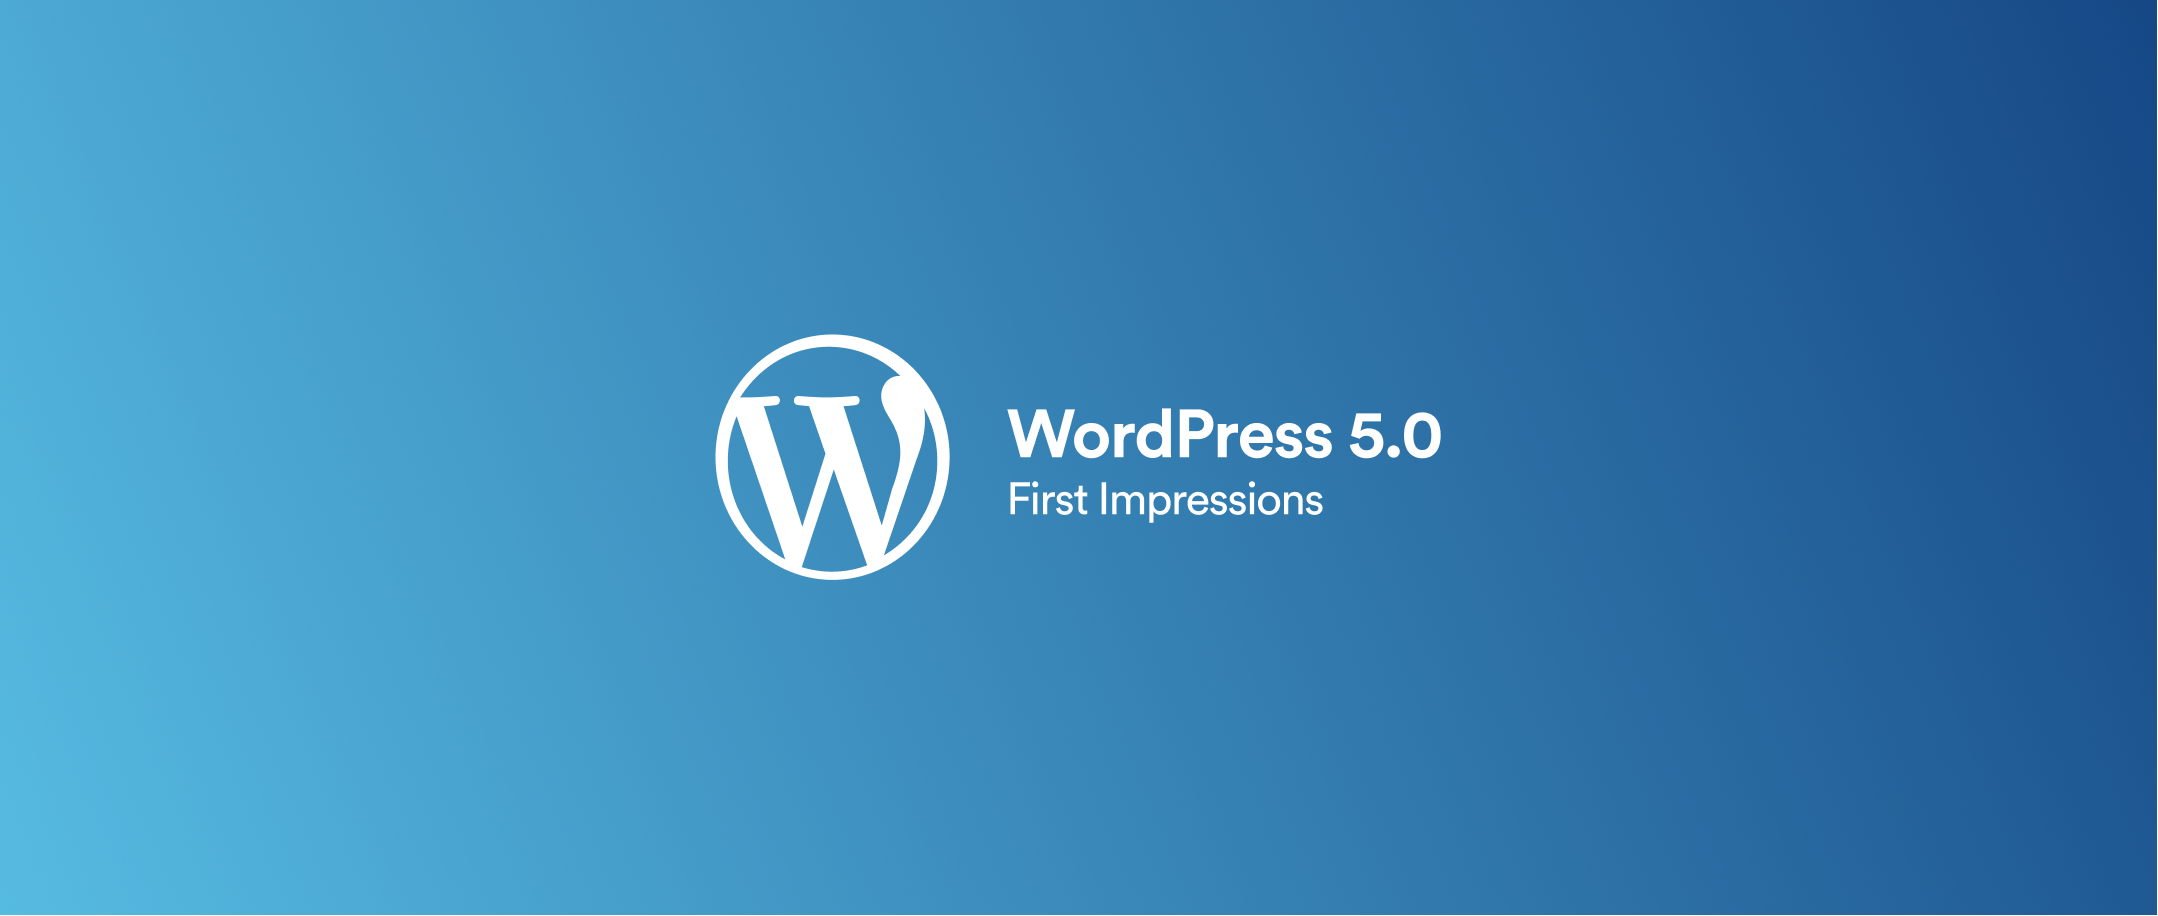 word press 5.0 first impressions